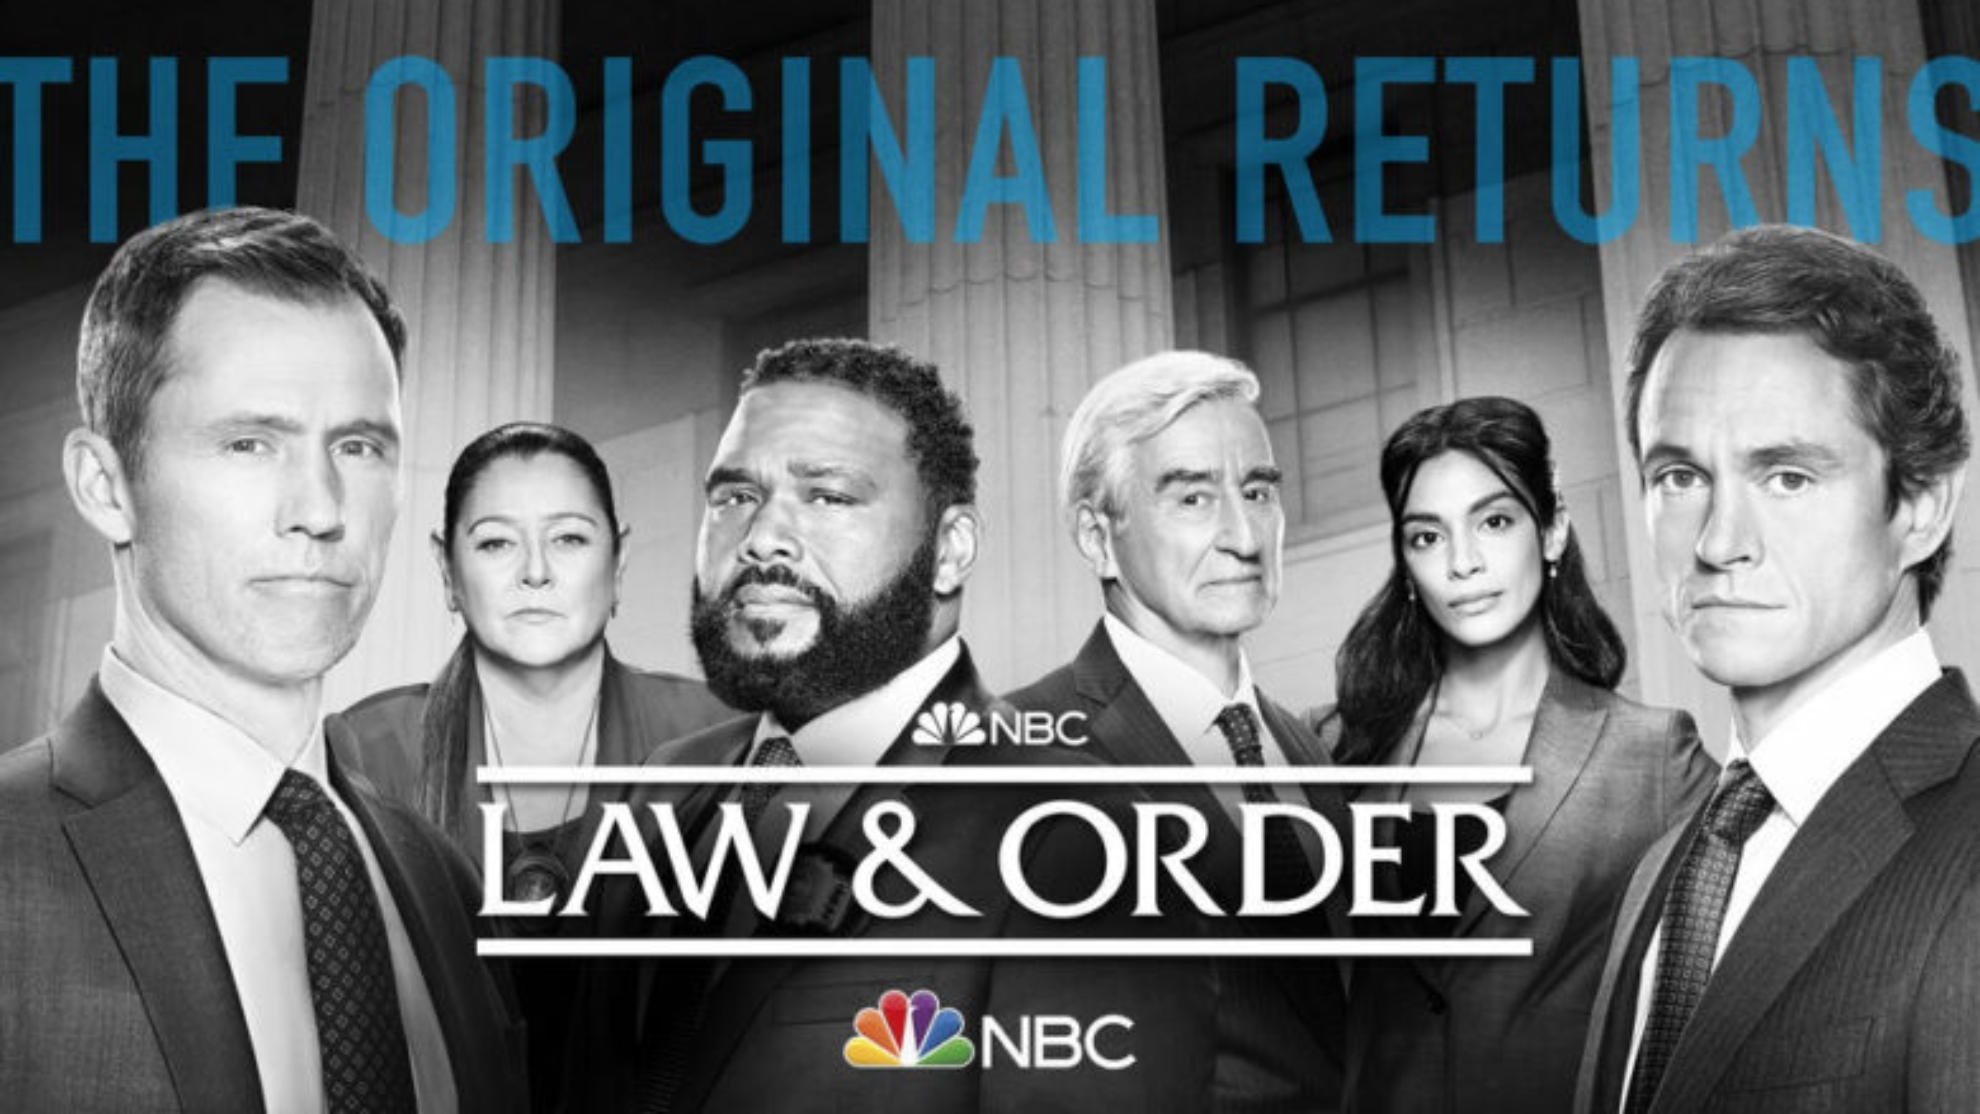 Law & Order Season 21 cover image